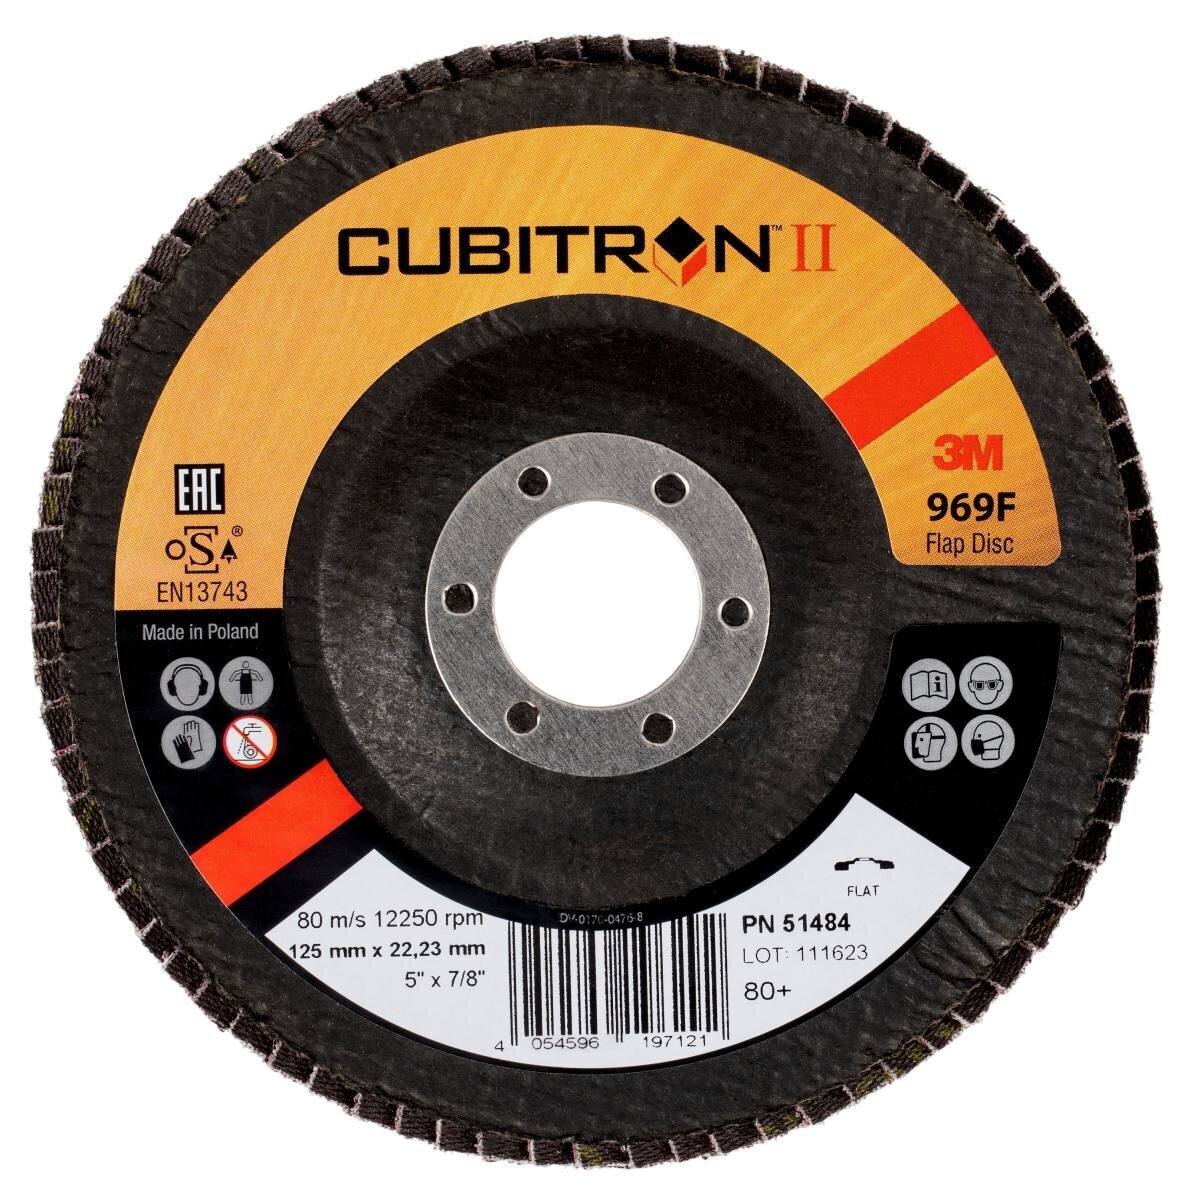 3M 969F Cubitron II flap discs d=125mm P80+ #51484 flat